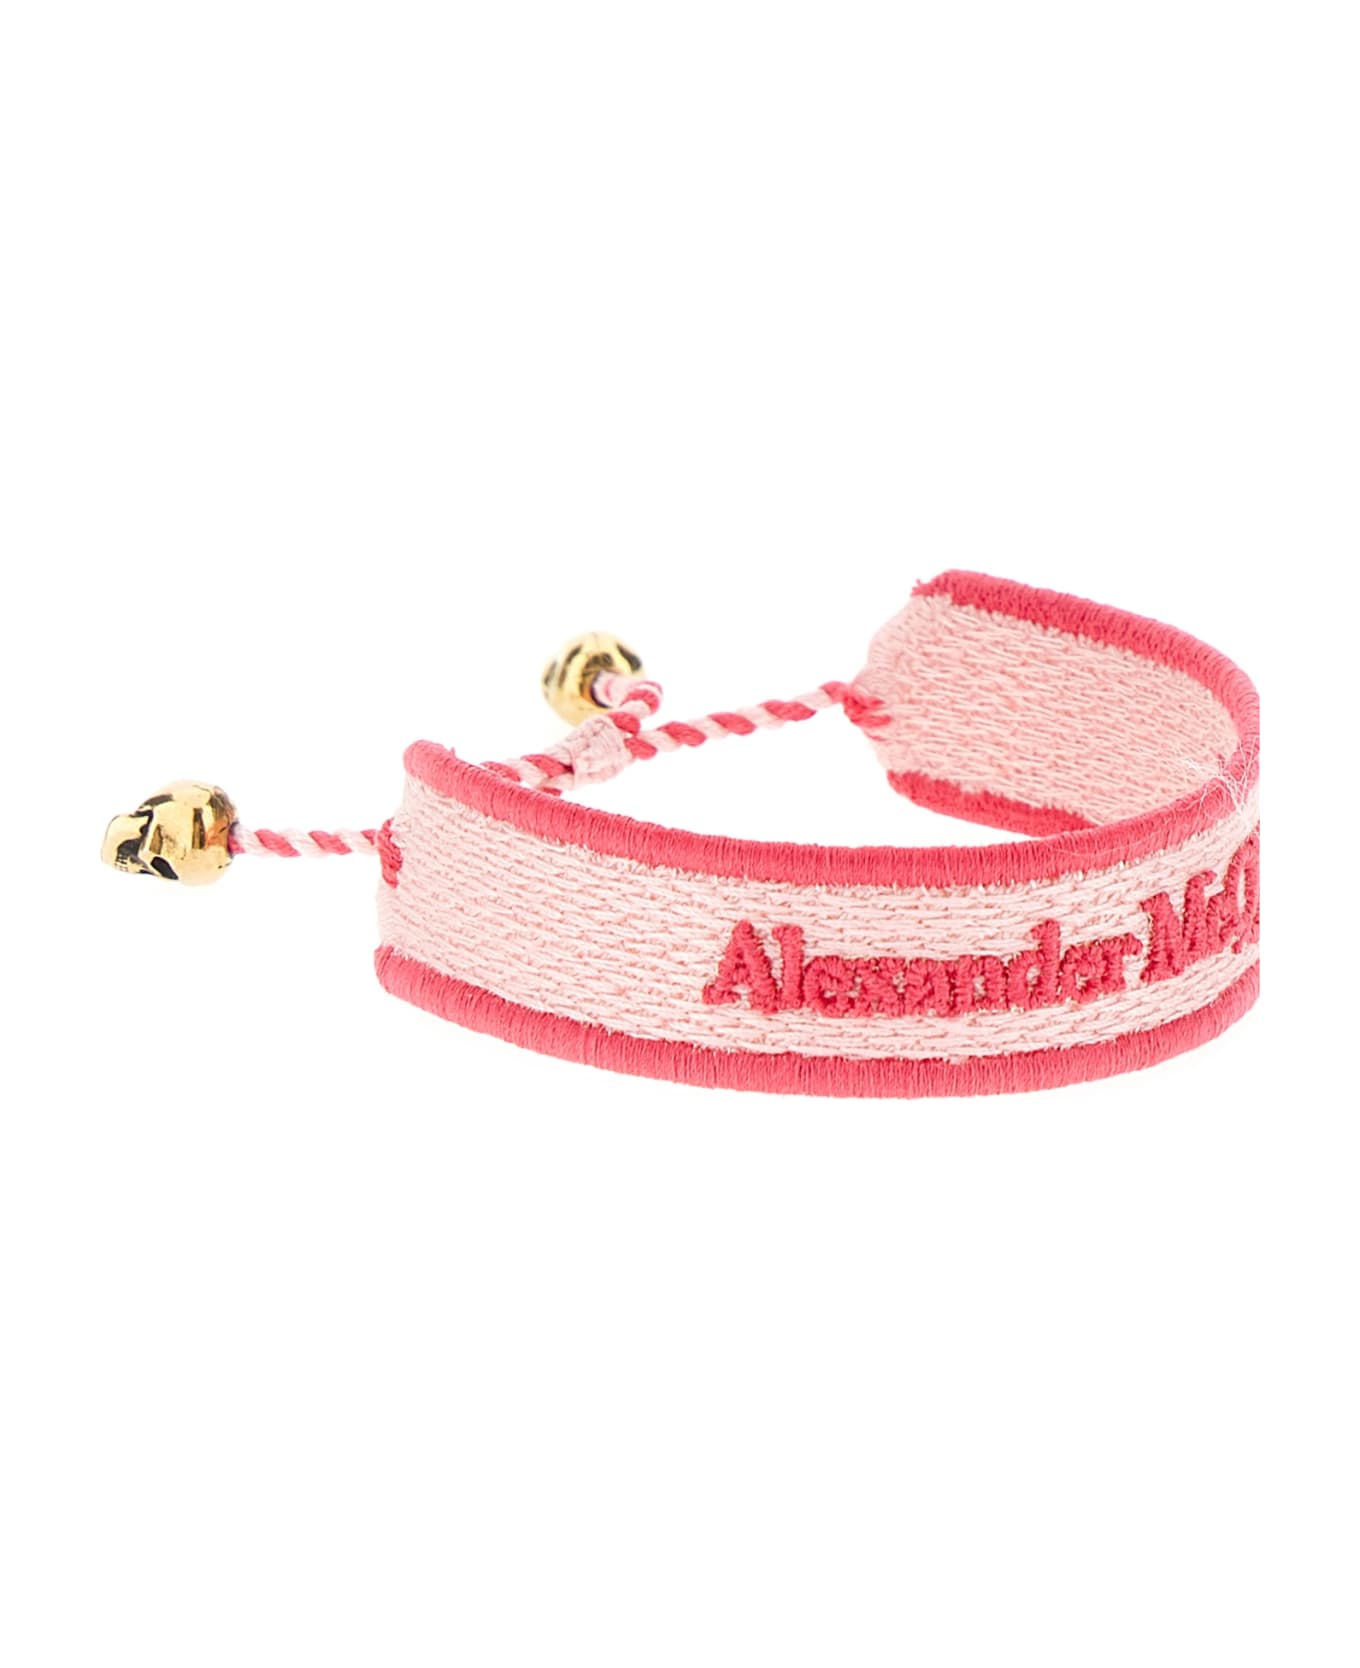 Alexander McQueen Embroidered Logo Bracelet - Pink